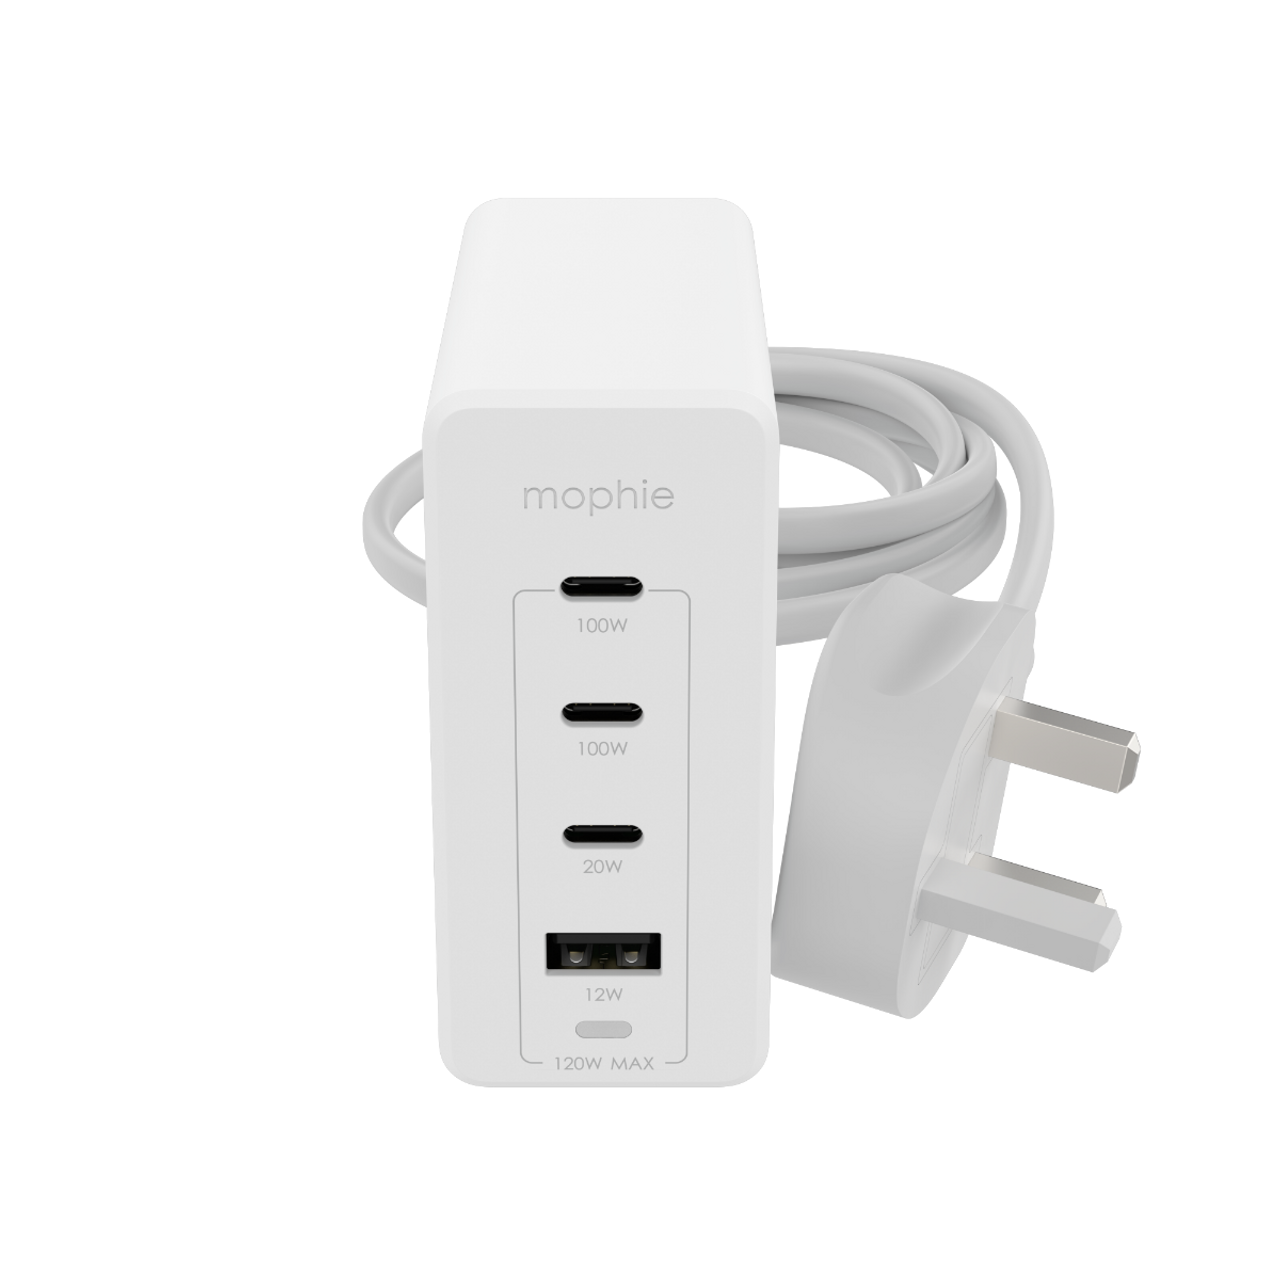 mophie speedport 30 1-port GaN wall charger (30W) - Apple (IE)